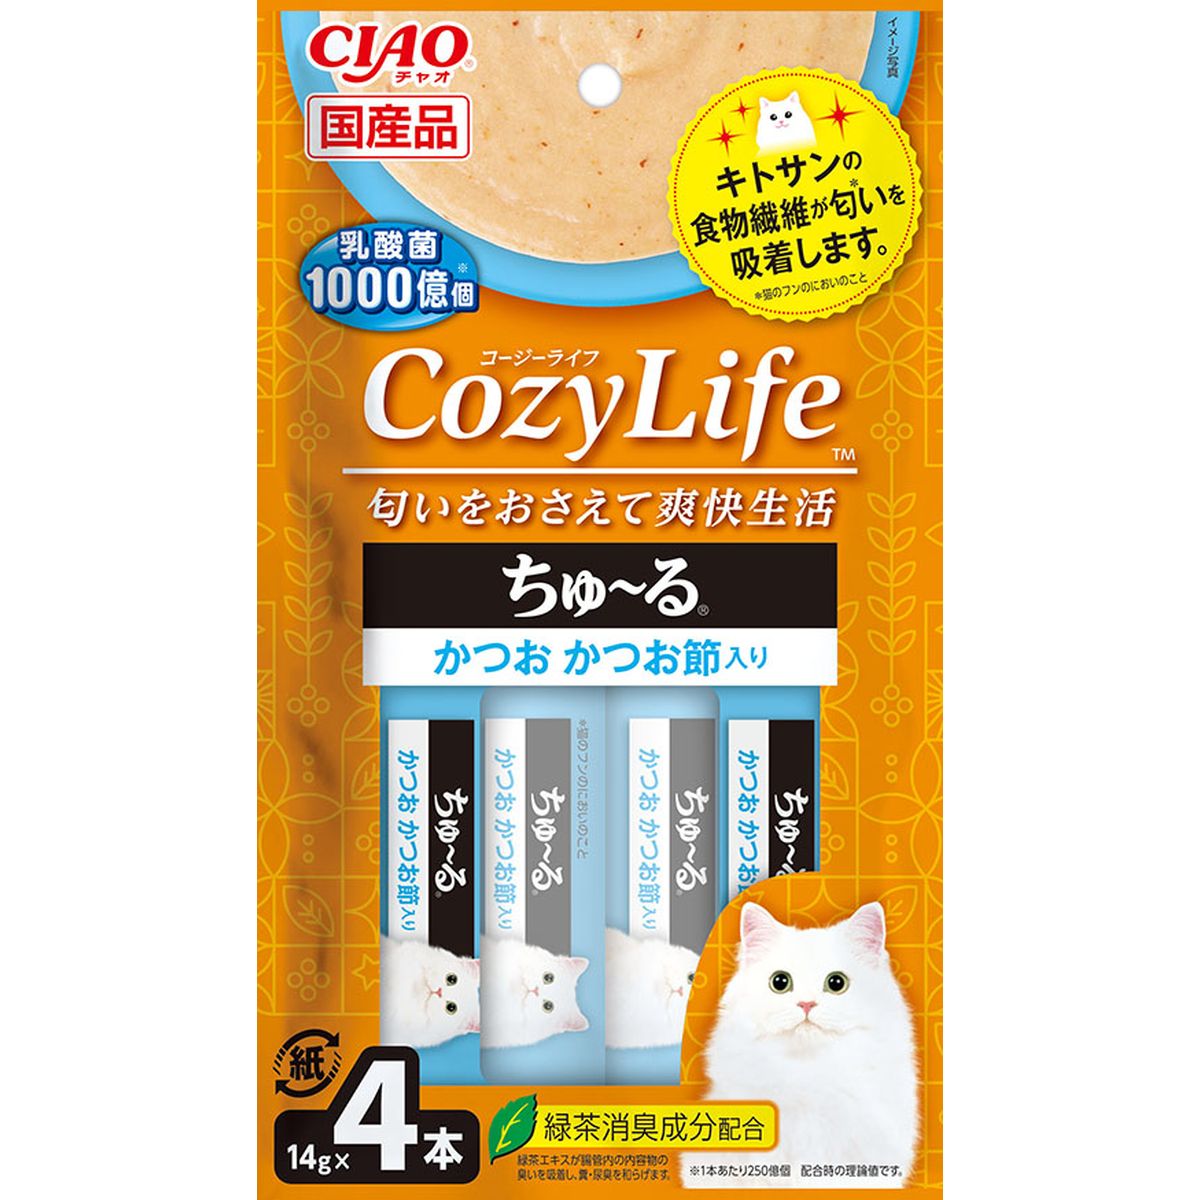 CIAO Cozy Lifeチュール カツオカツオ節入リ 4本×48